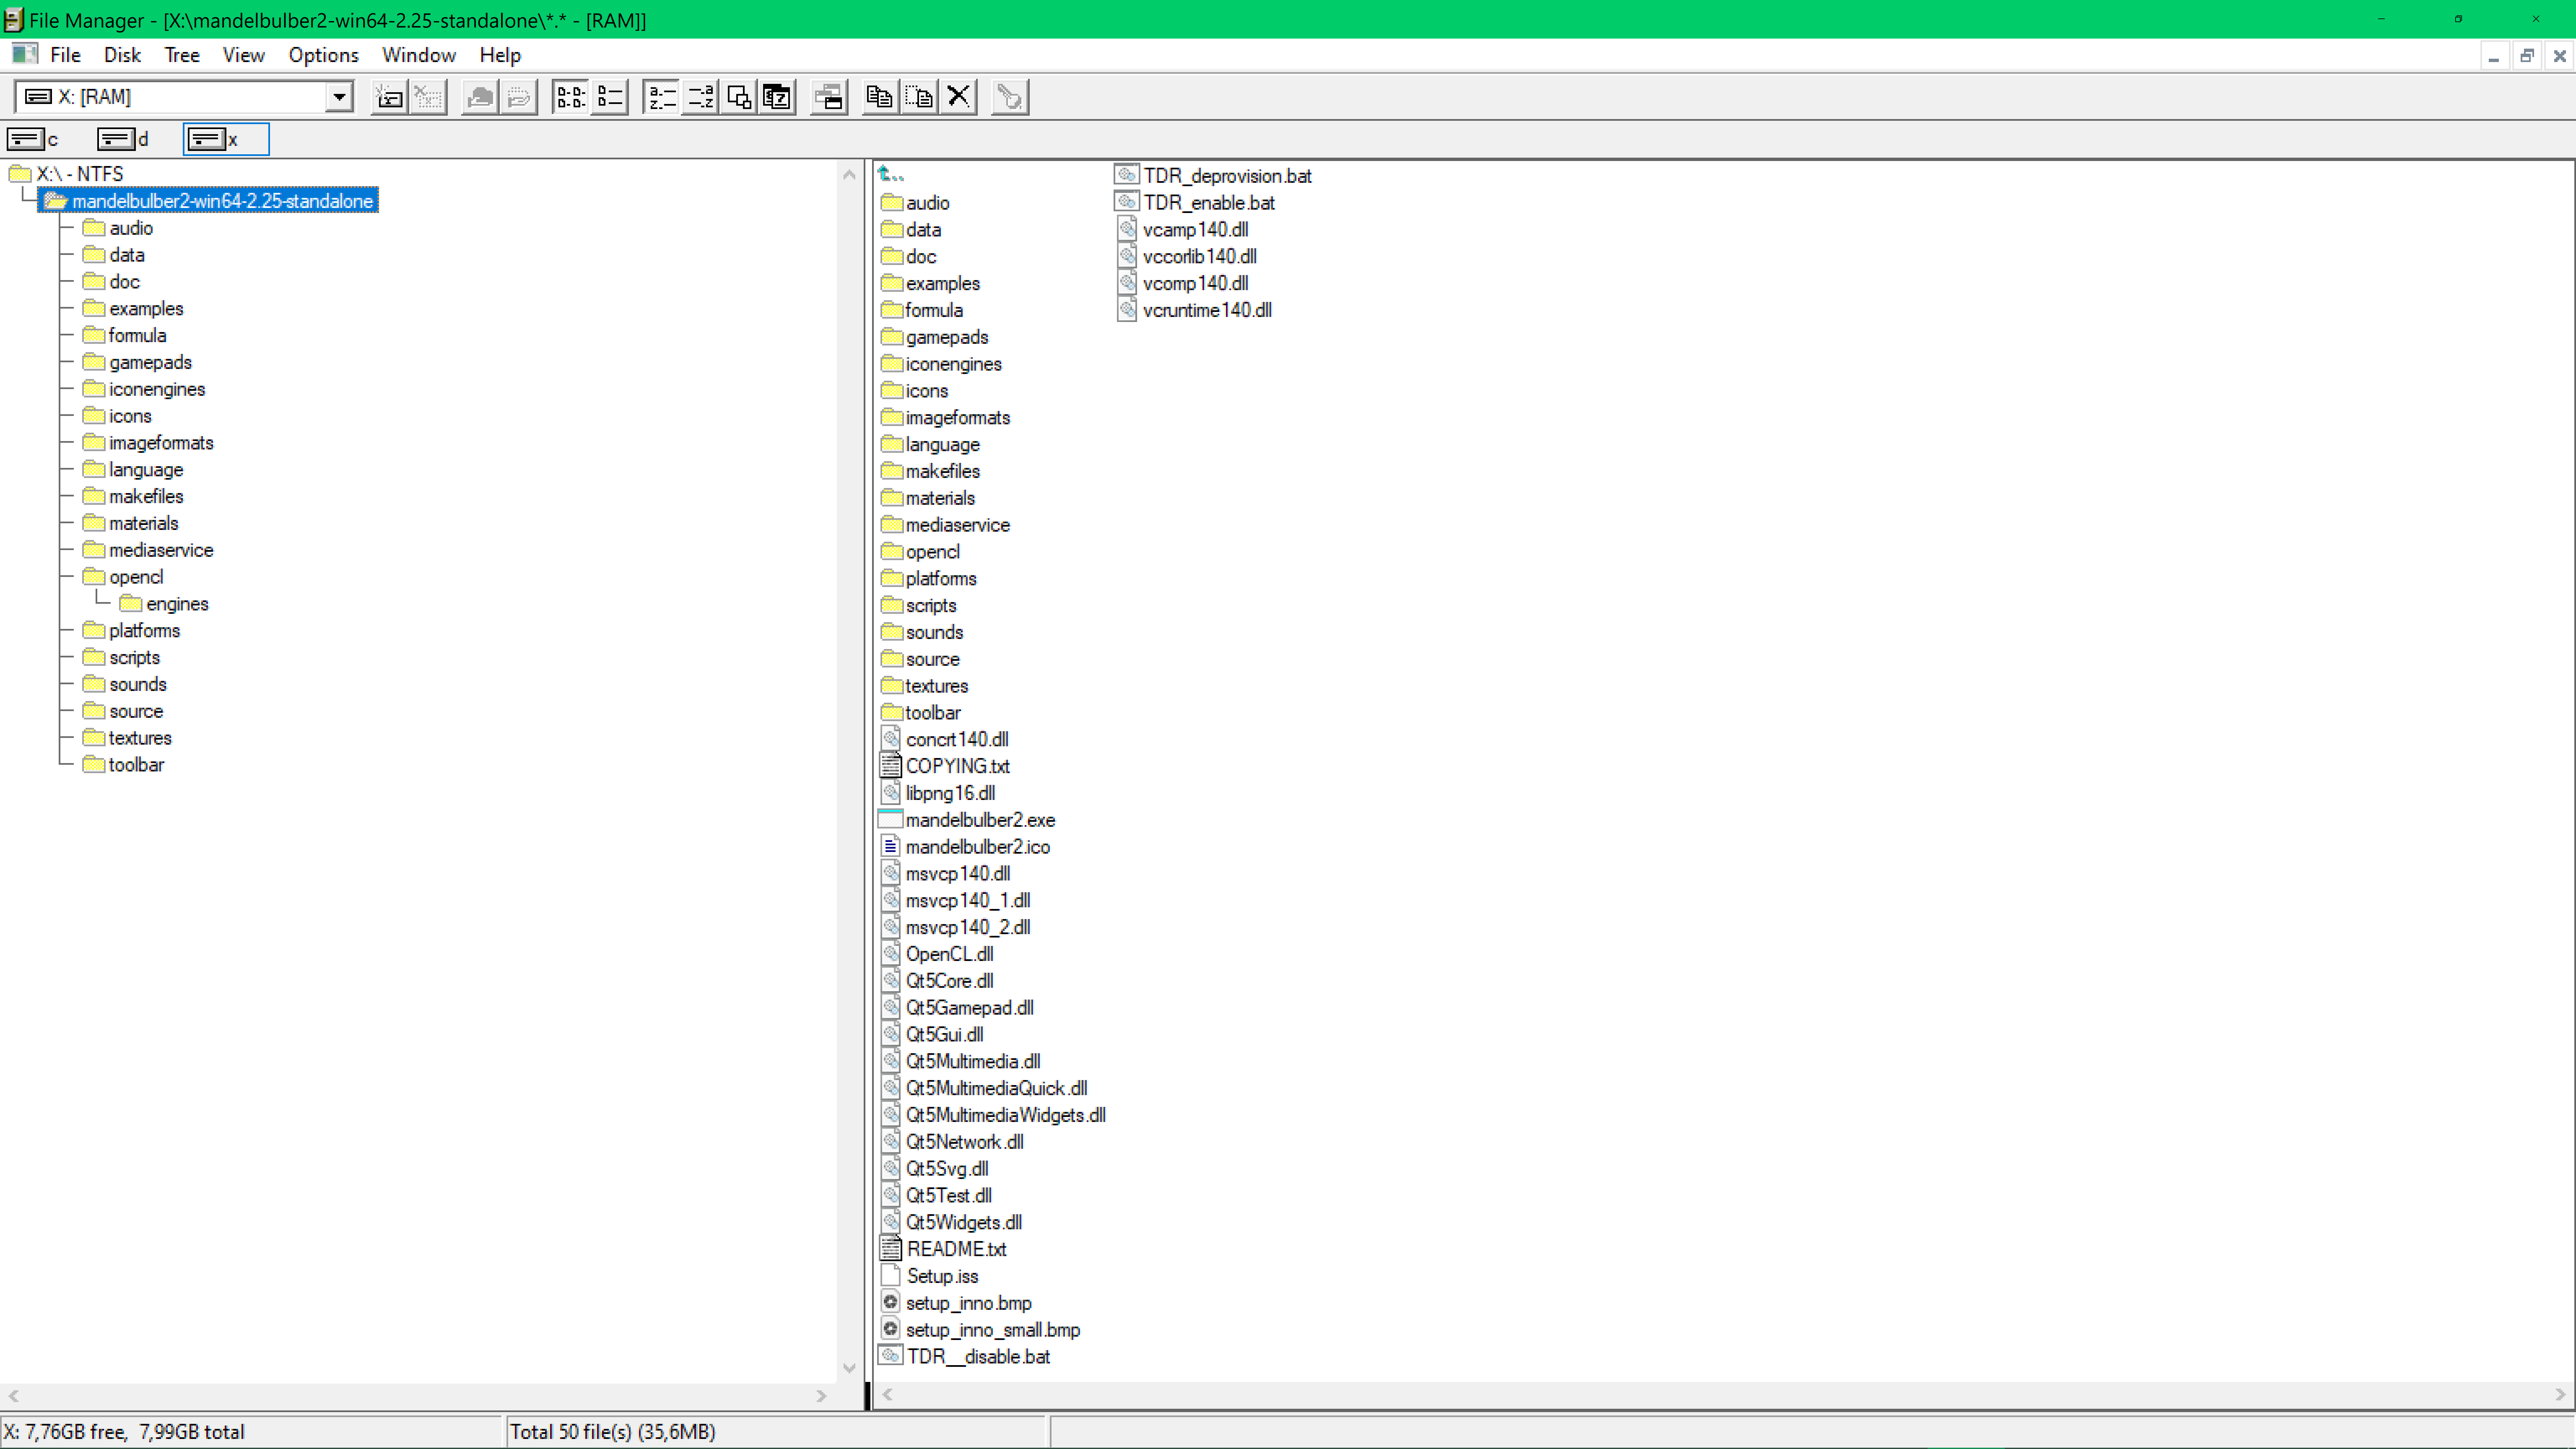 A Windows system folder containing EXE files.